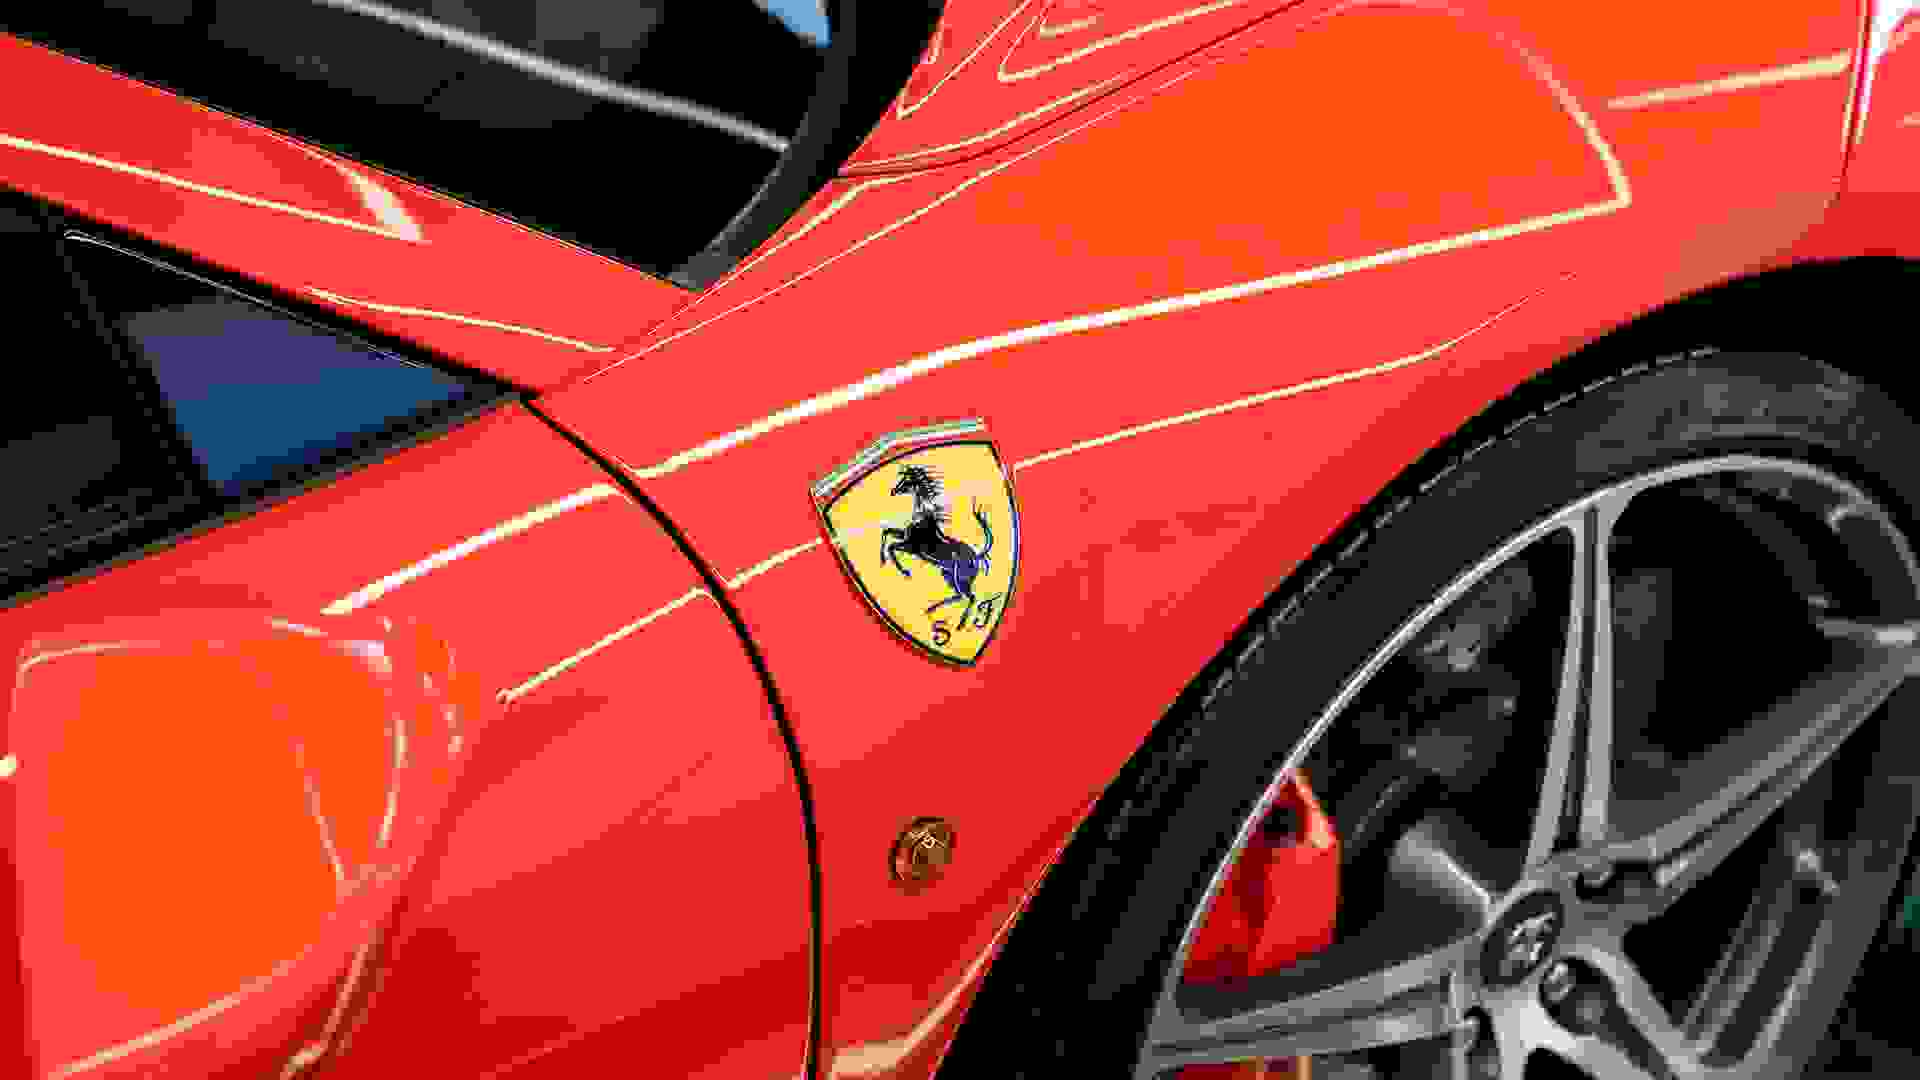 Ferrari 458 Photo 23ada1ca-0cdf-4089-a1bf-dc32f8954ee8.jpg